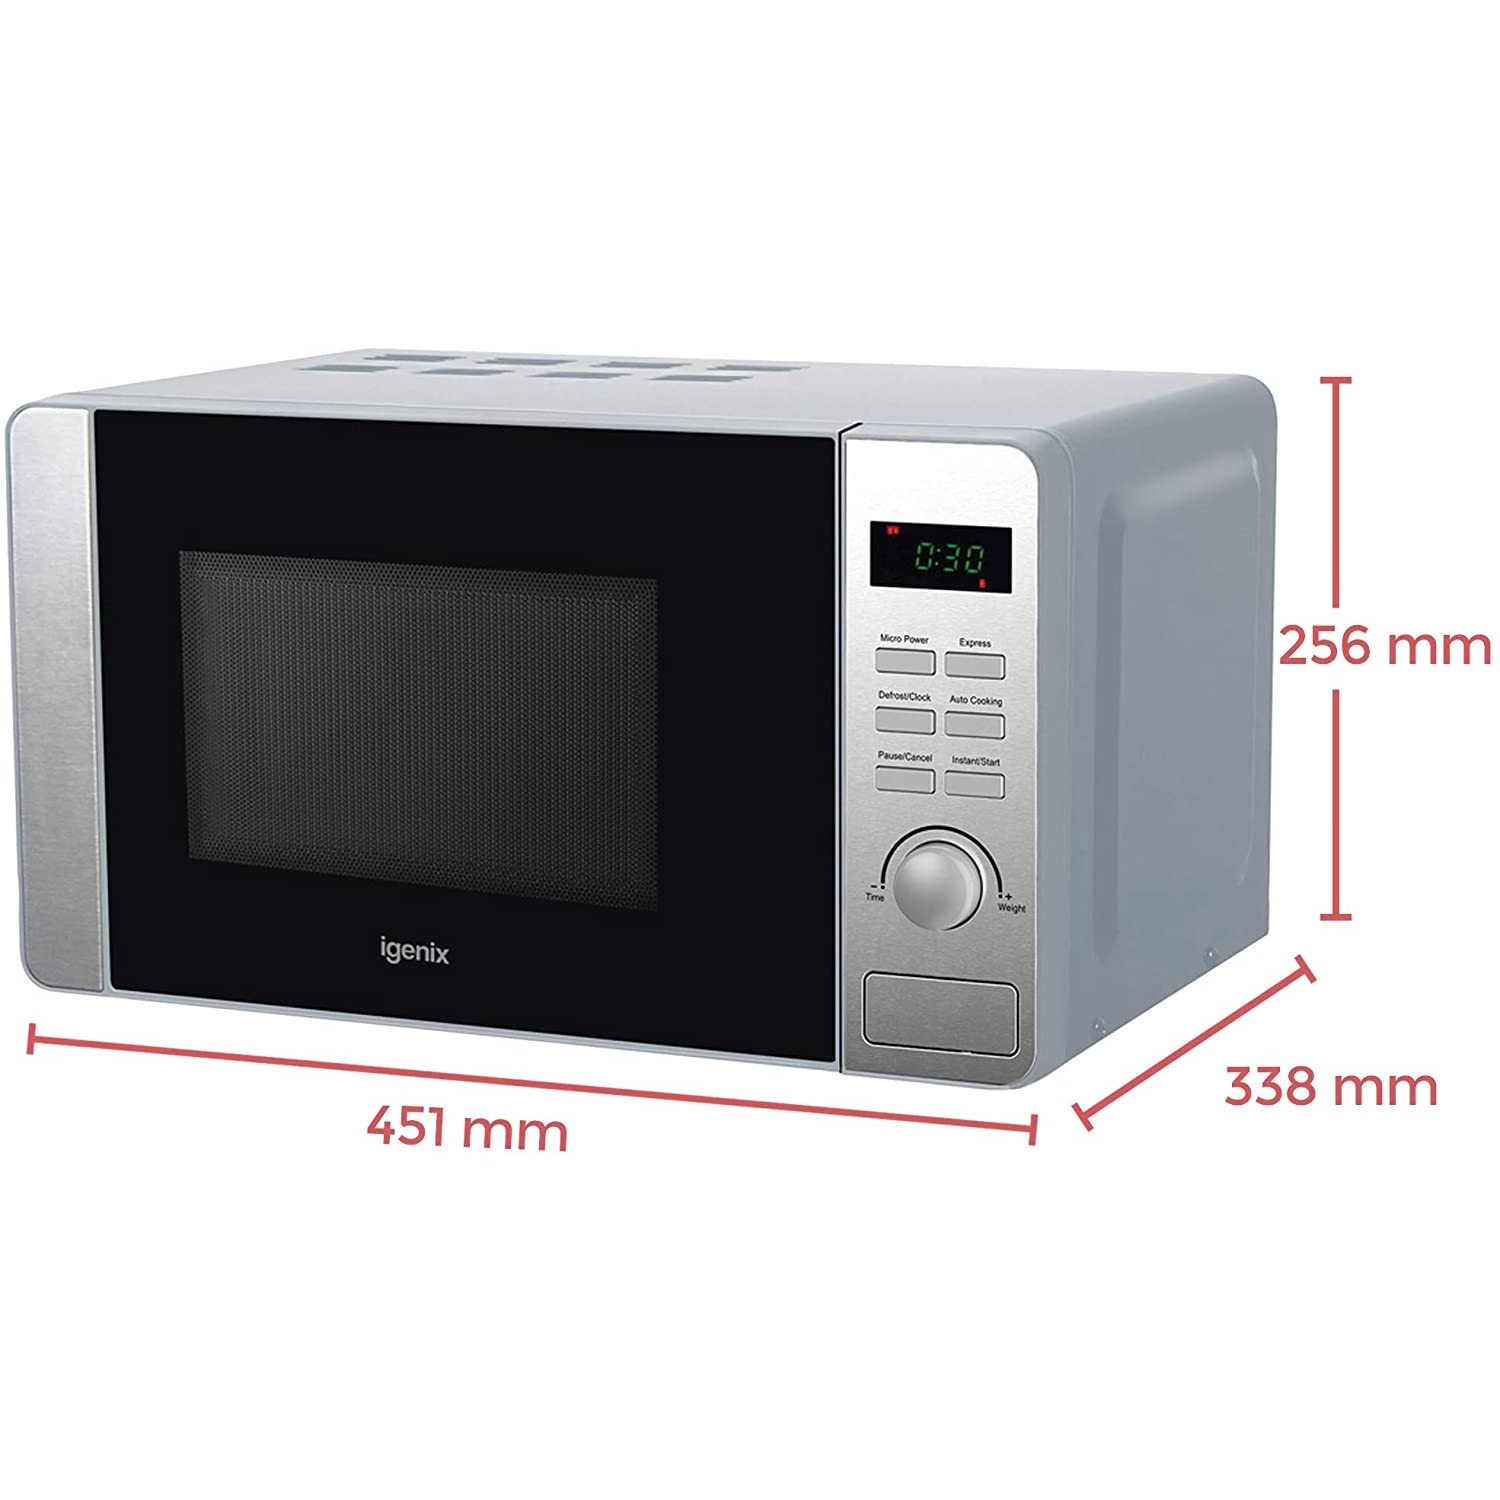 Igenix stainless steel 20L microwave - 0